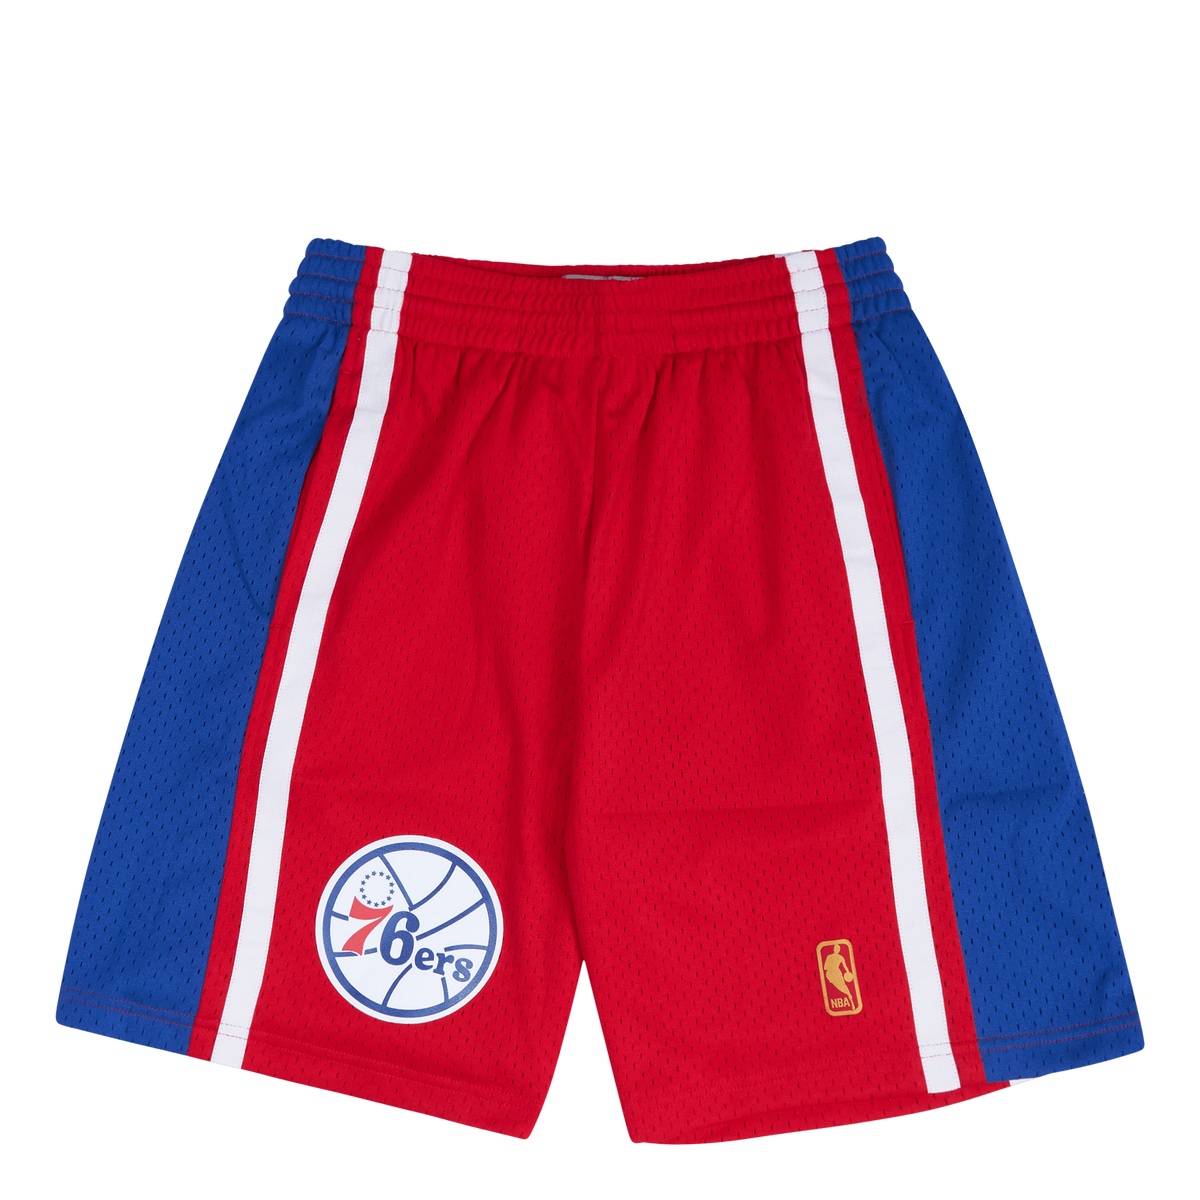 76ers Swingman Shorts 96-97